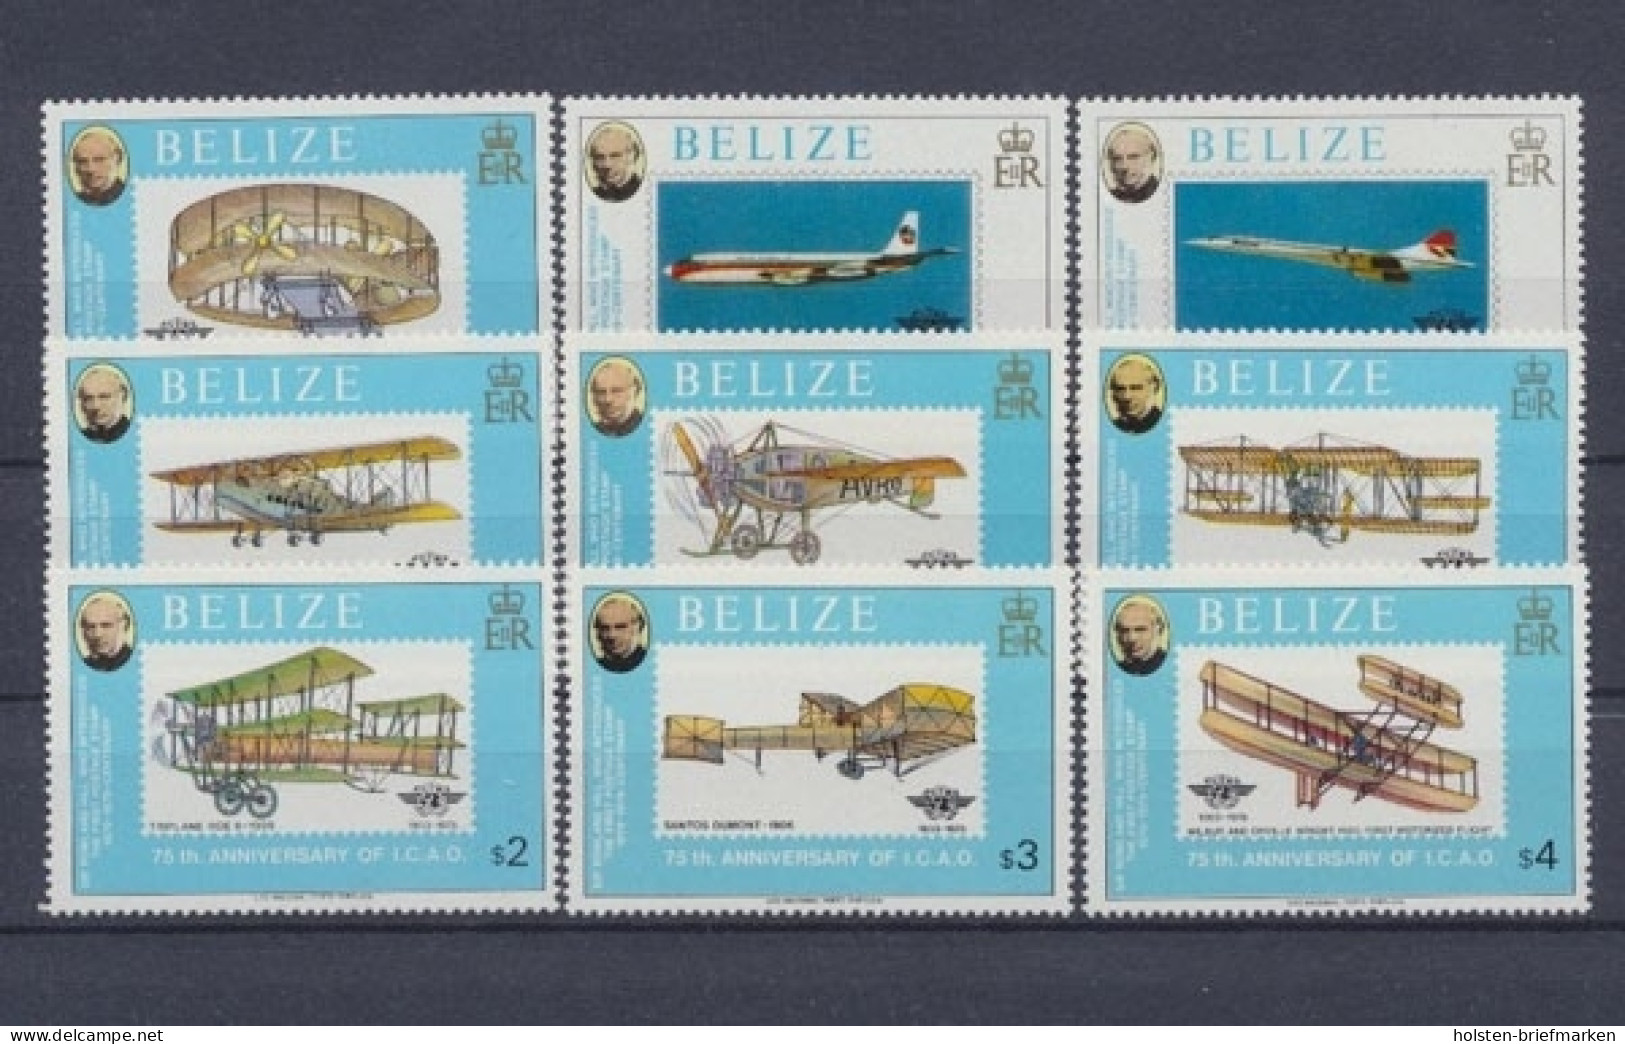 Belize, Flugzeuge, MiNr. 420-428, Postfrisch - Belice (1973-...)